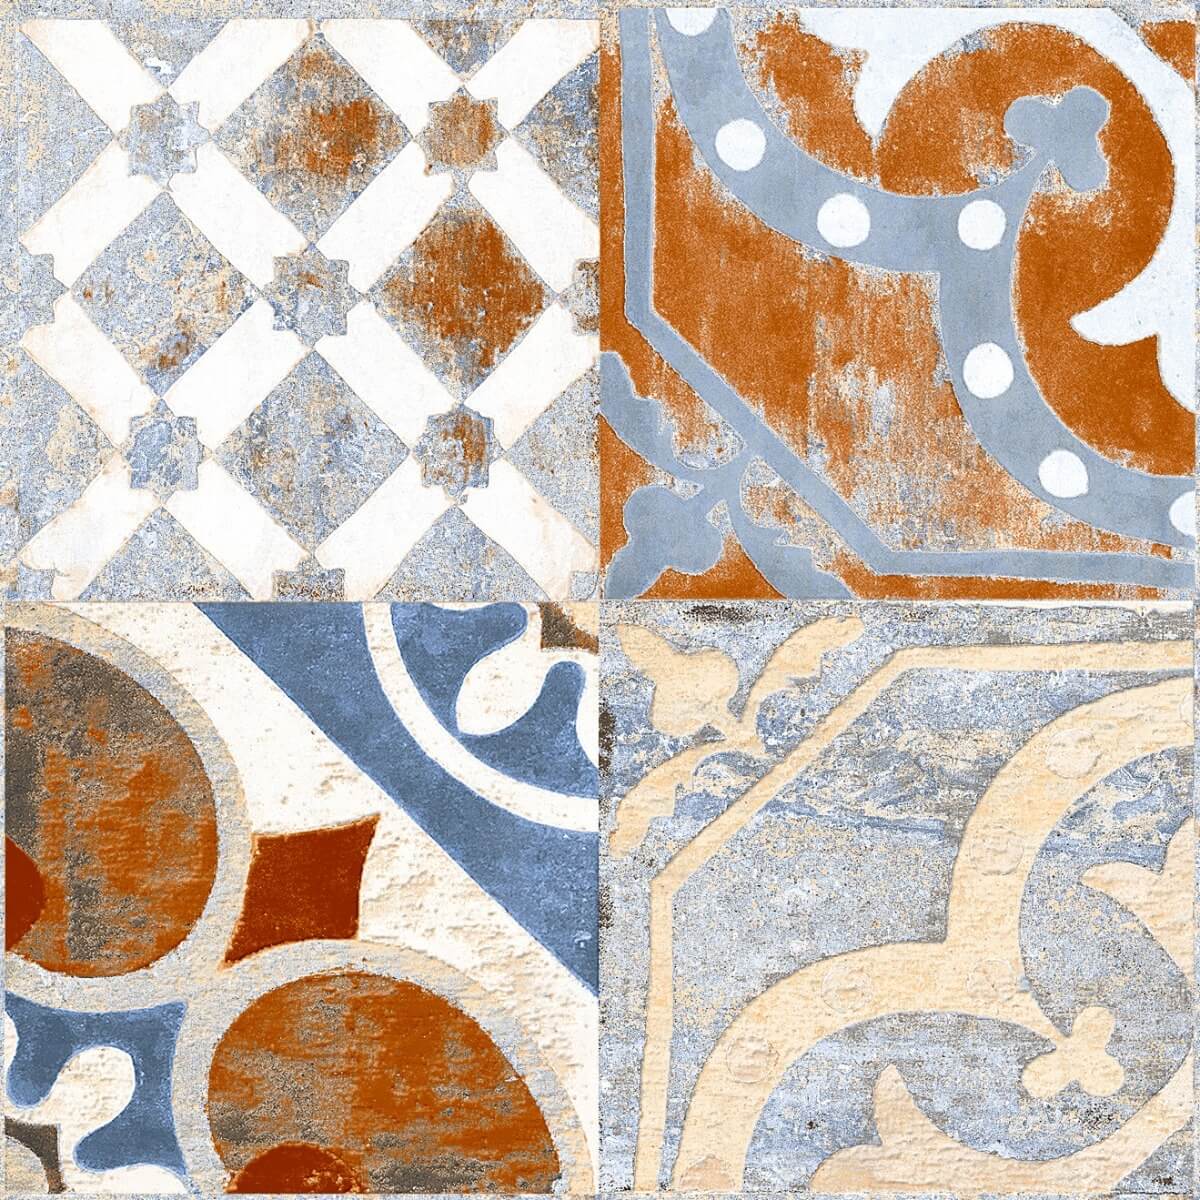 GVT Tiles for Accent Tiles, Dining Room Tiles, Hospital Tiles, Bar/Restaurant, Outdoor Area